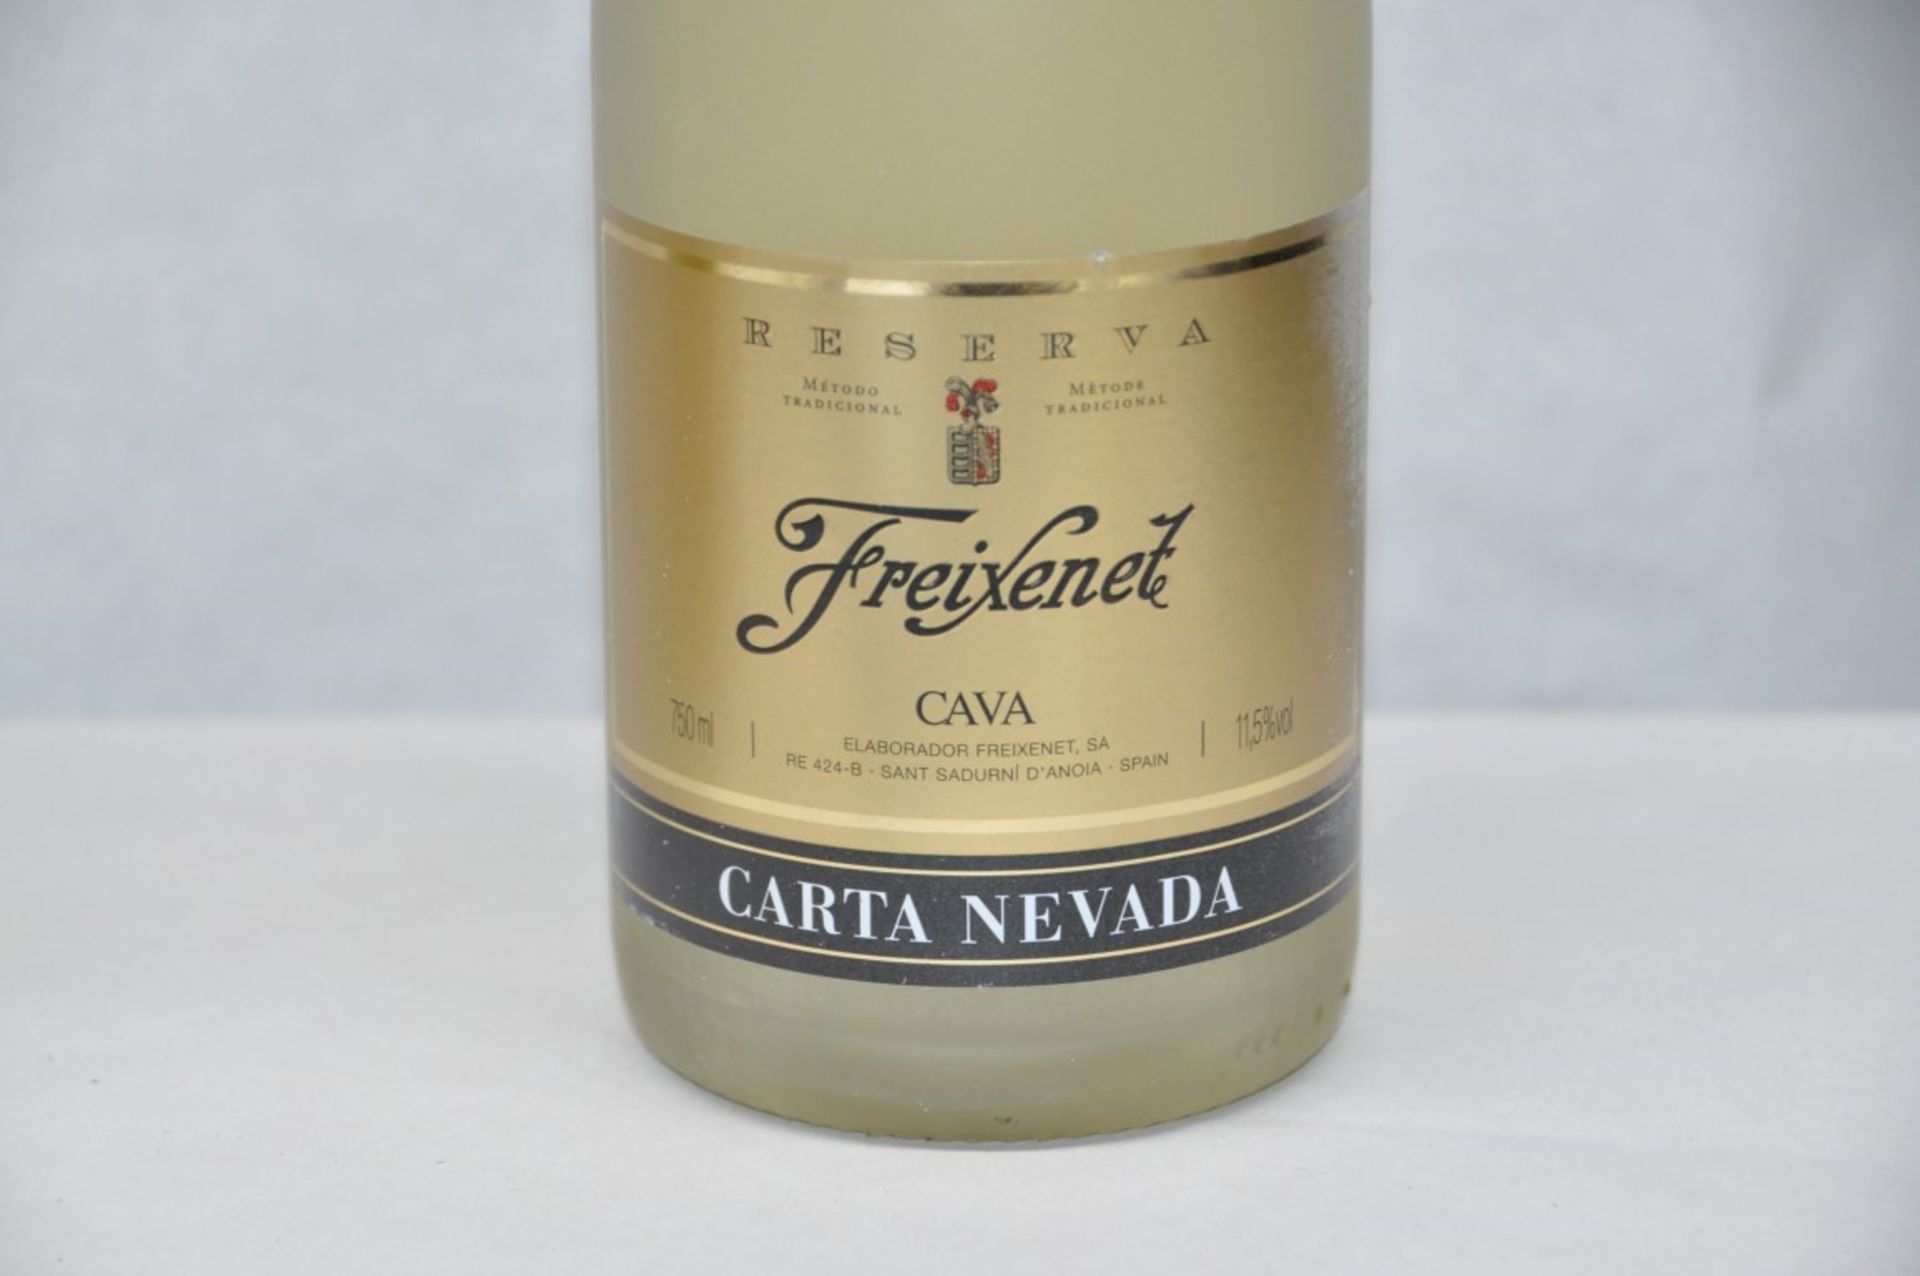 1 x Reserva Freixenet Carta Nevada Cava - 75cl Bottle - Sealed UK Stock - 11.5% Volume - CL103 - Ref - Image 4 of 4